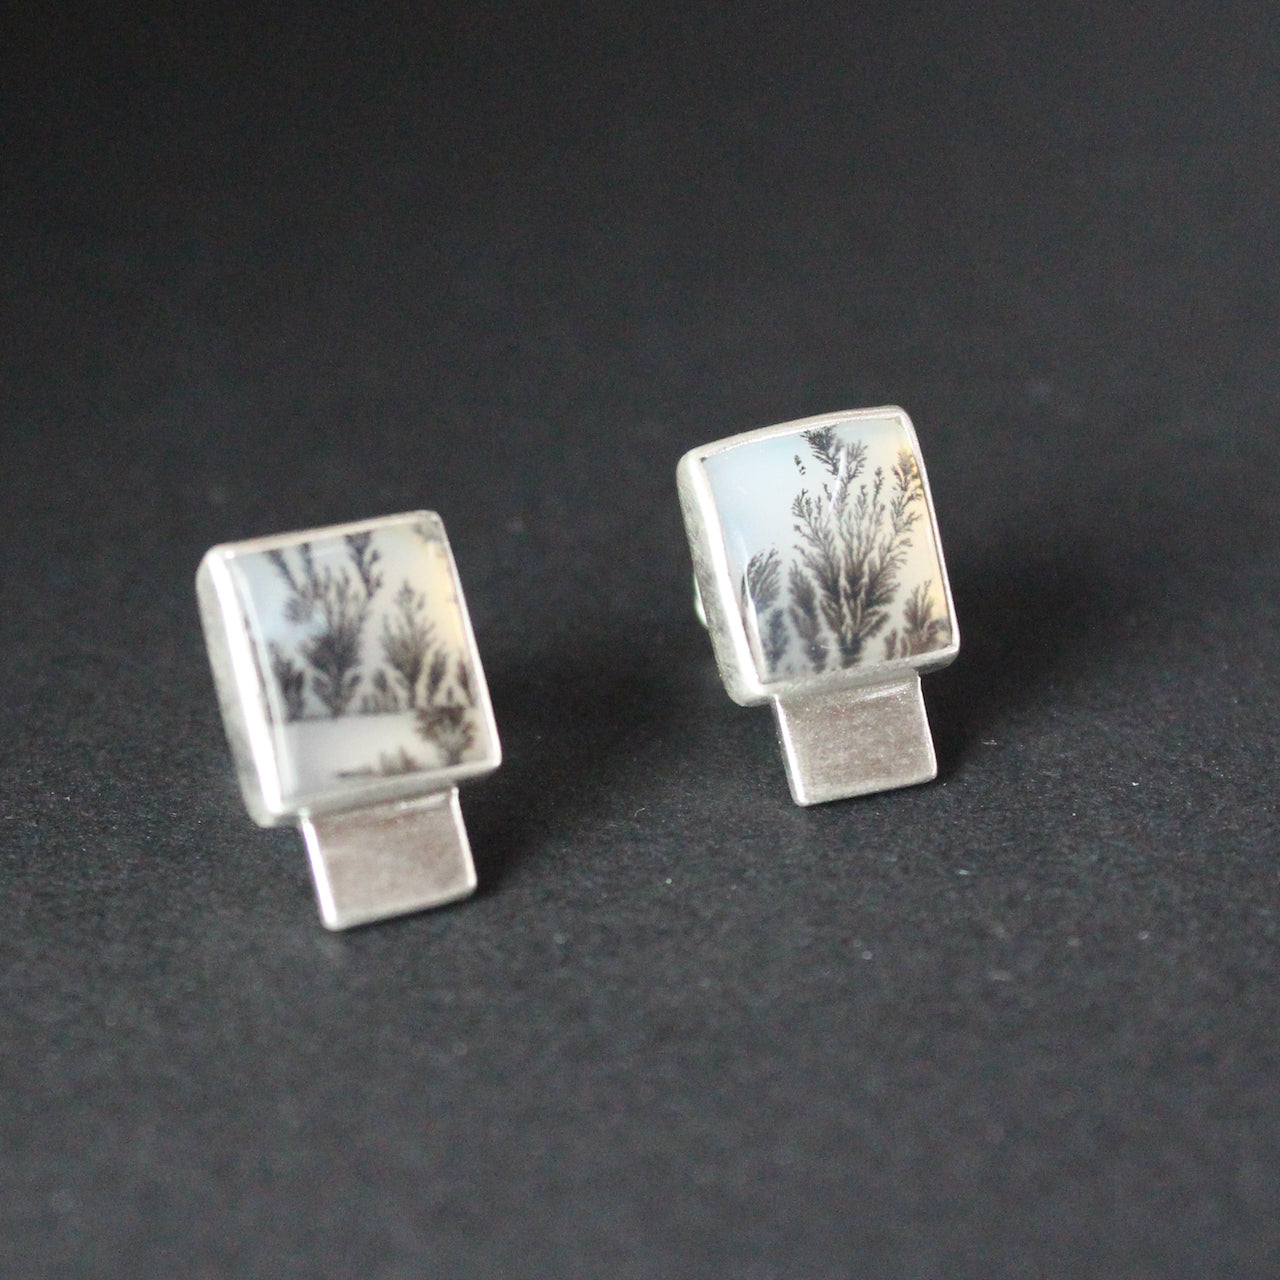 Carin Lindberg -  Dendritic Agate stud earrings in brushed silver